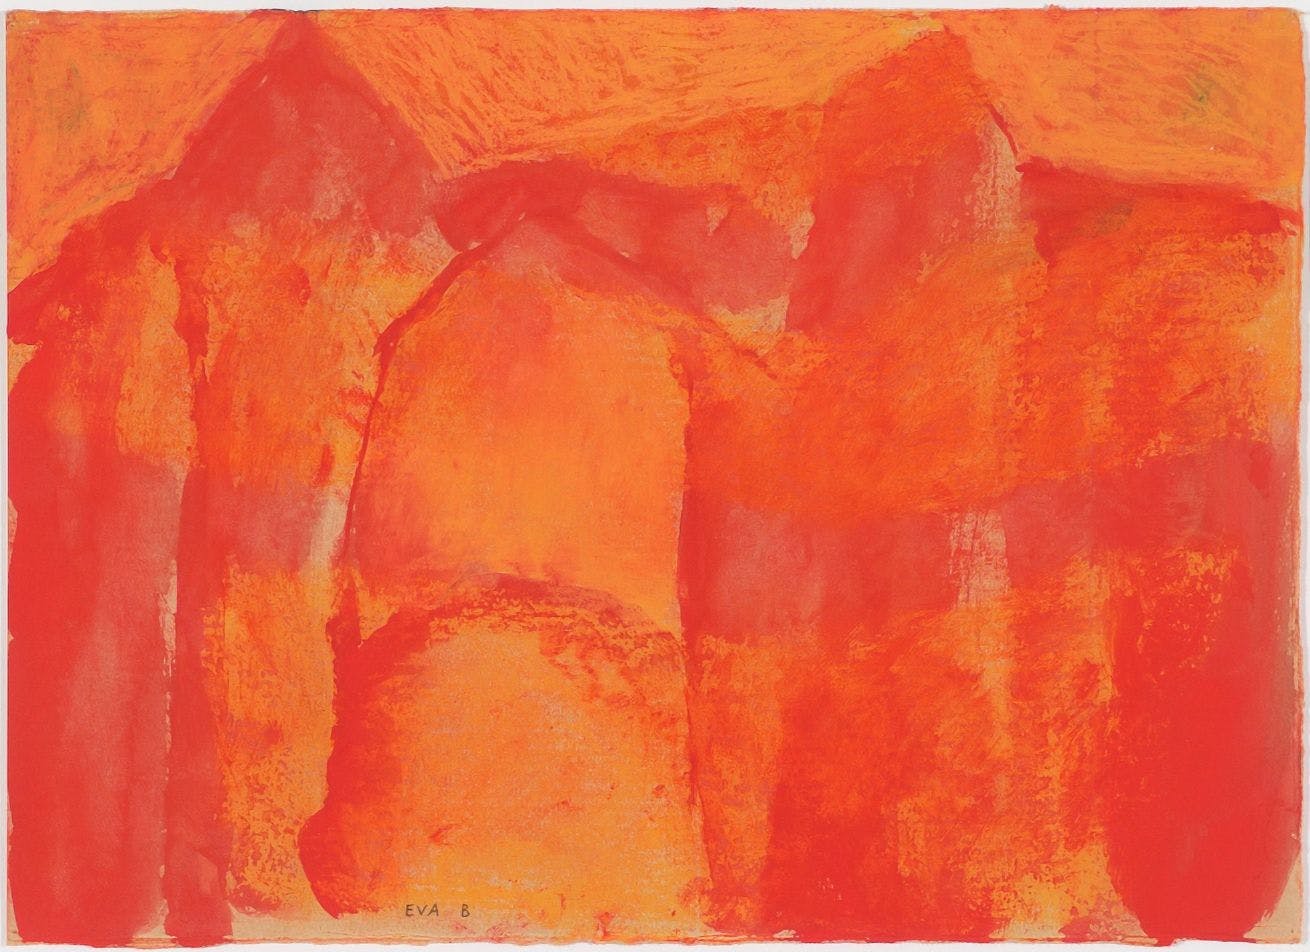 Art work: Eva Berge, The Cliff, 1994